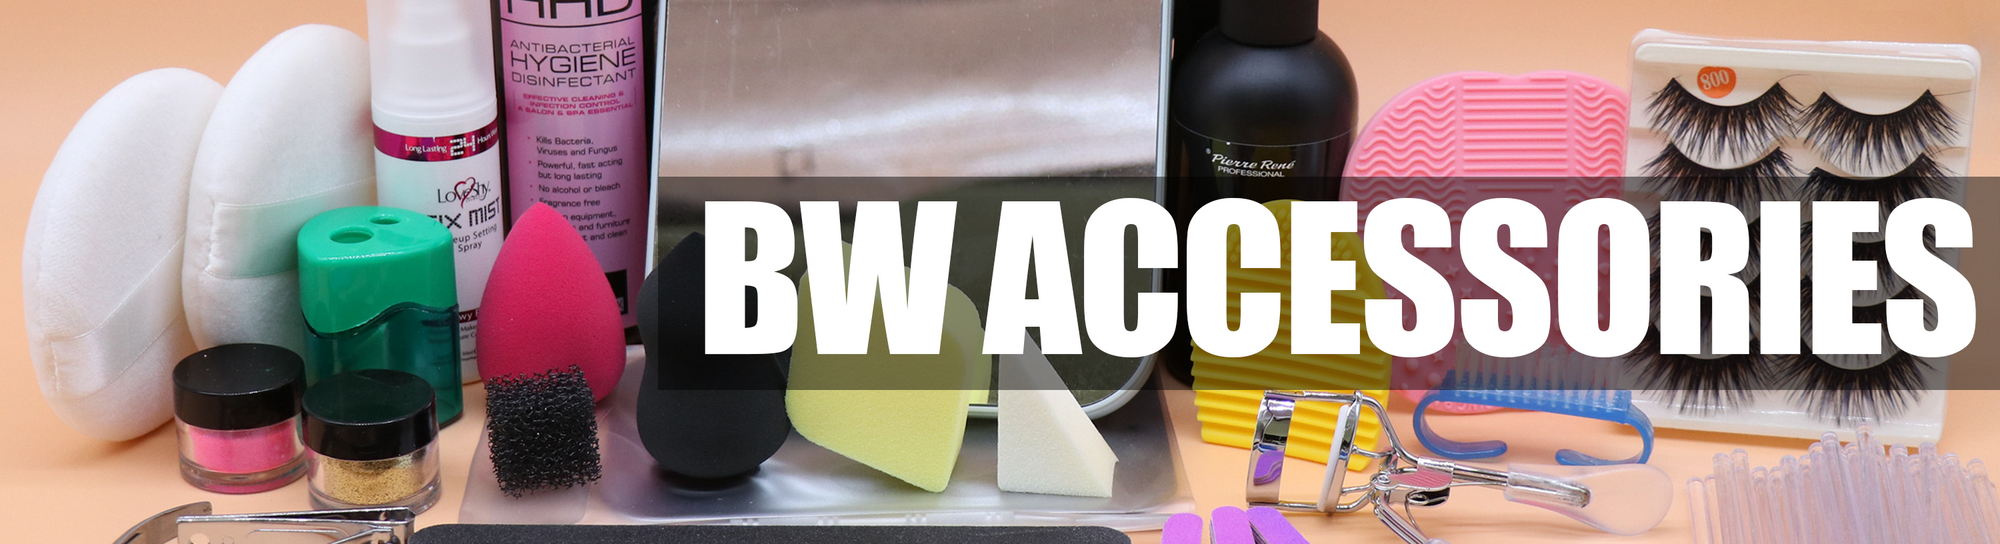 BW Accessories